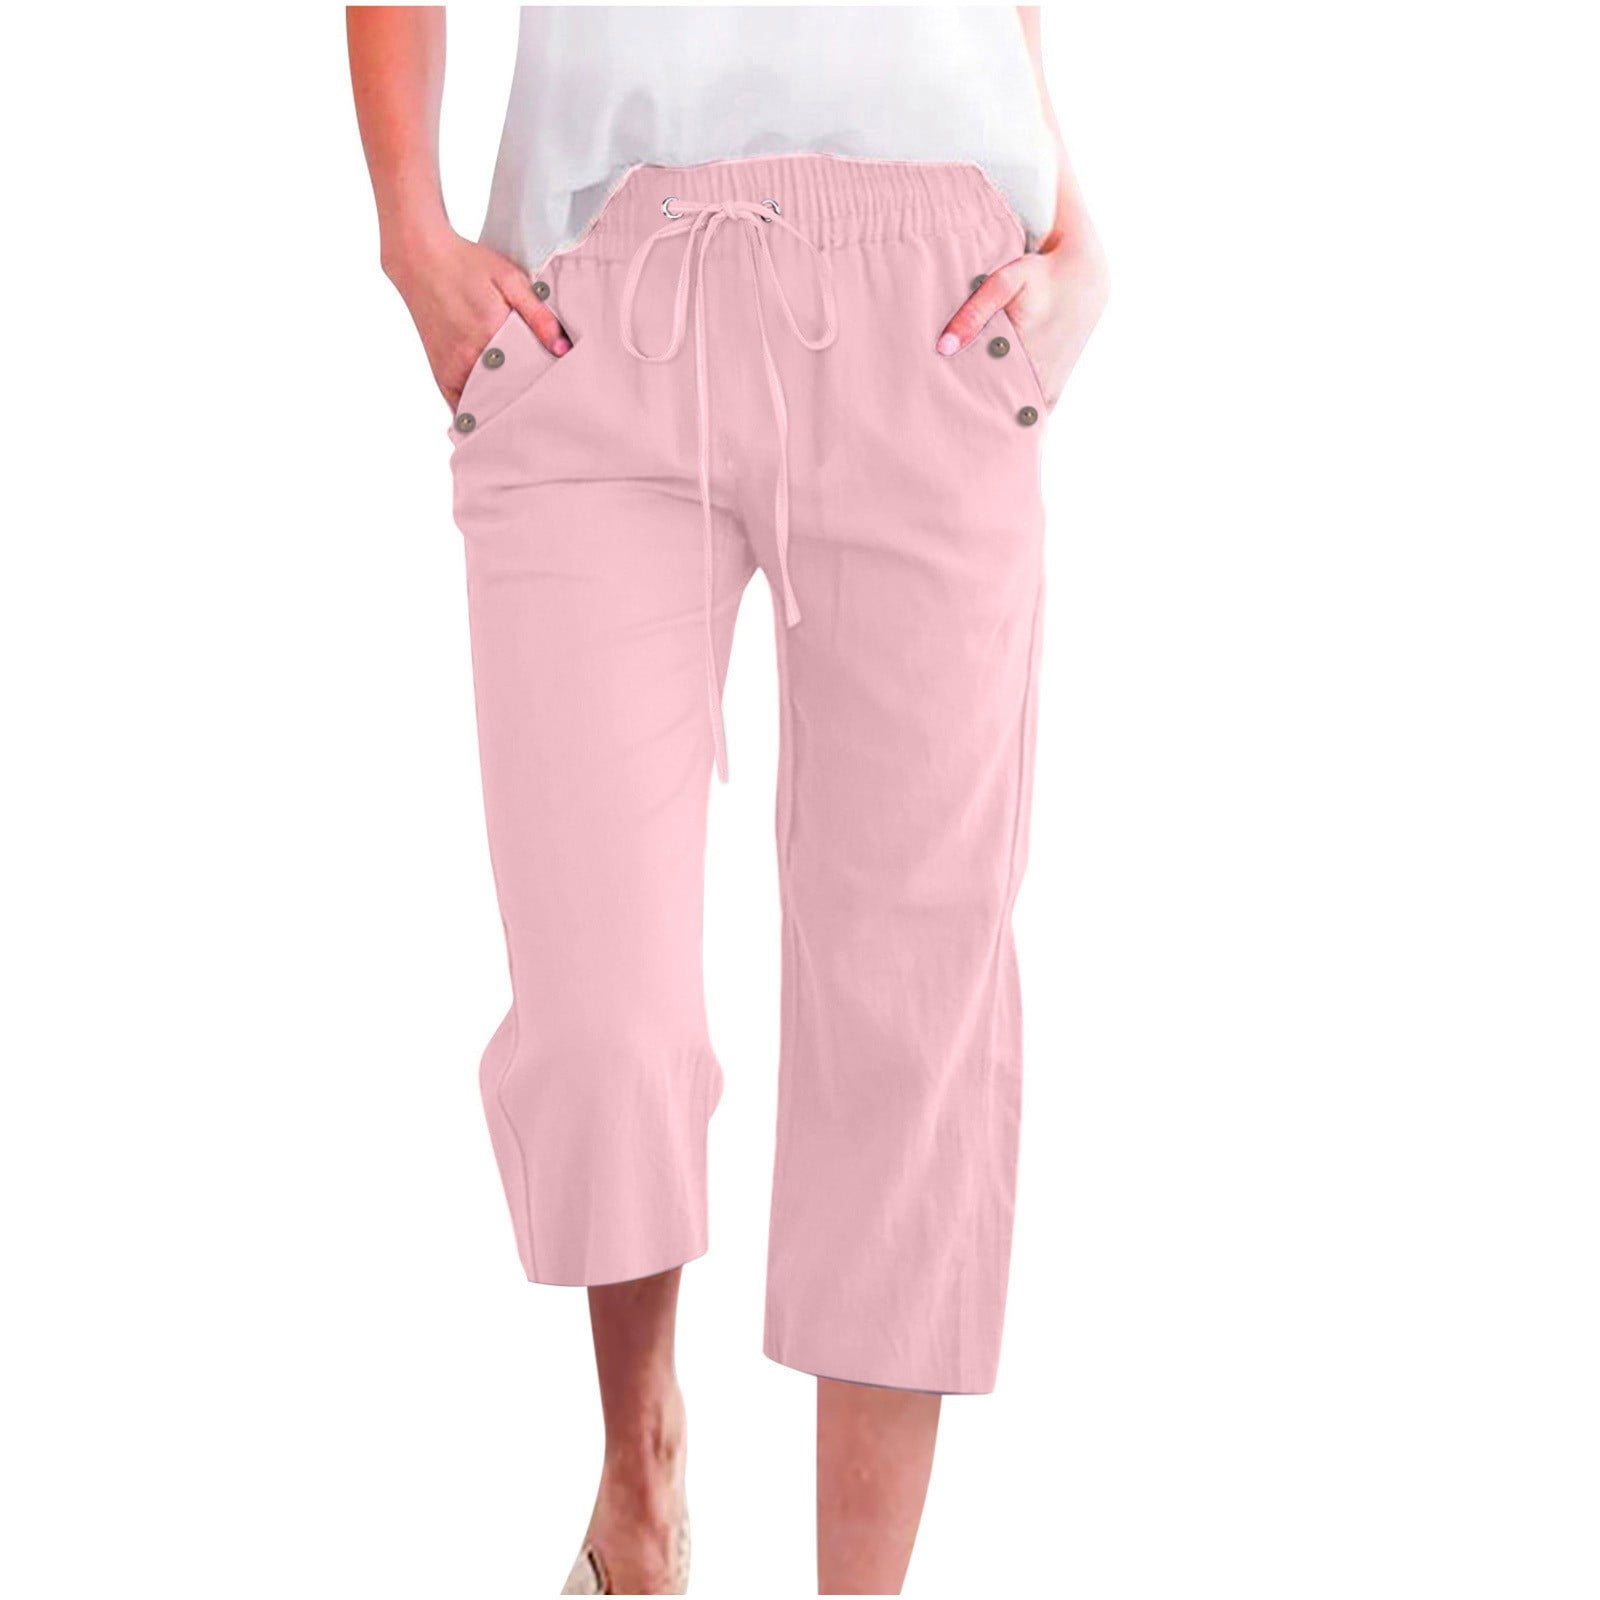 AILIYIL New Pants Women Fashion Solid Color Cotton Flax Elastic Long ...